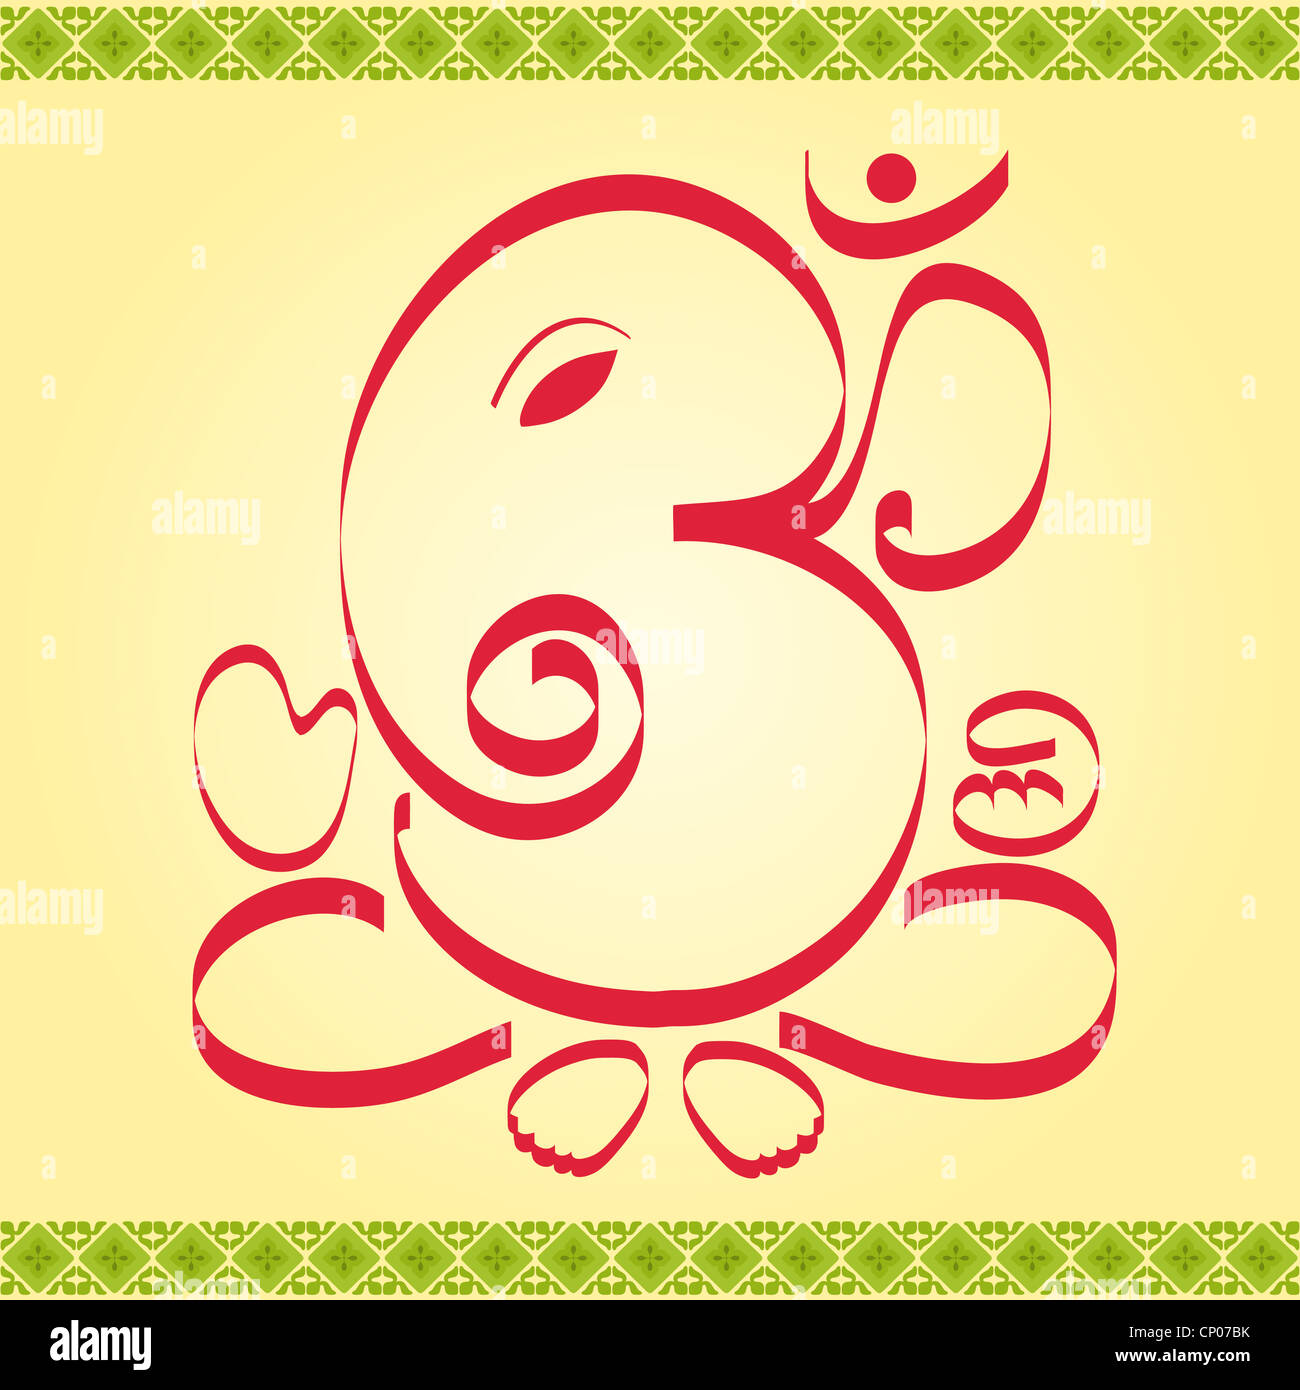 Indian God OM Ganesha design with artistic border Stock Photo - Alamy